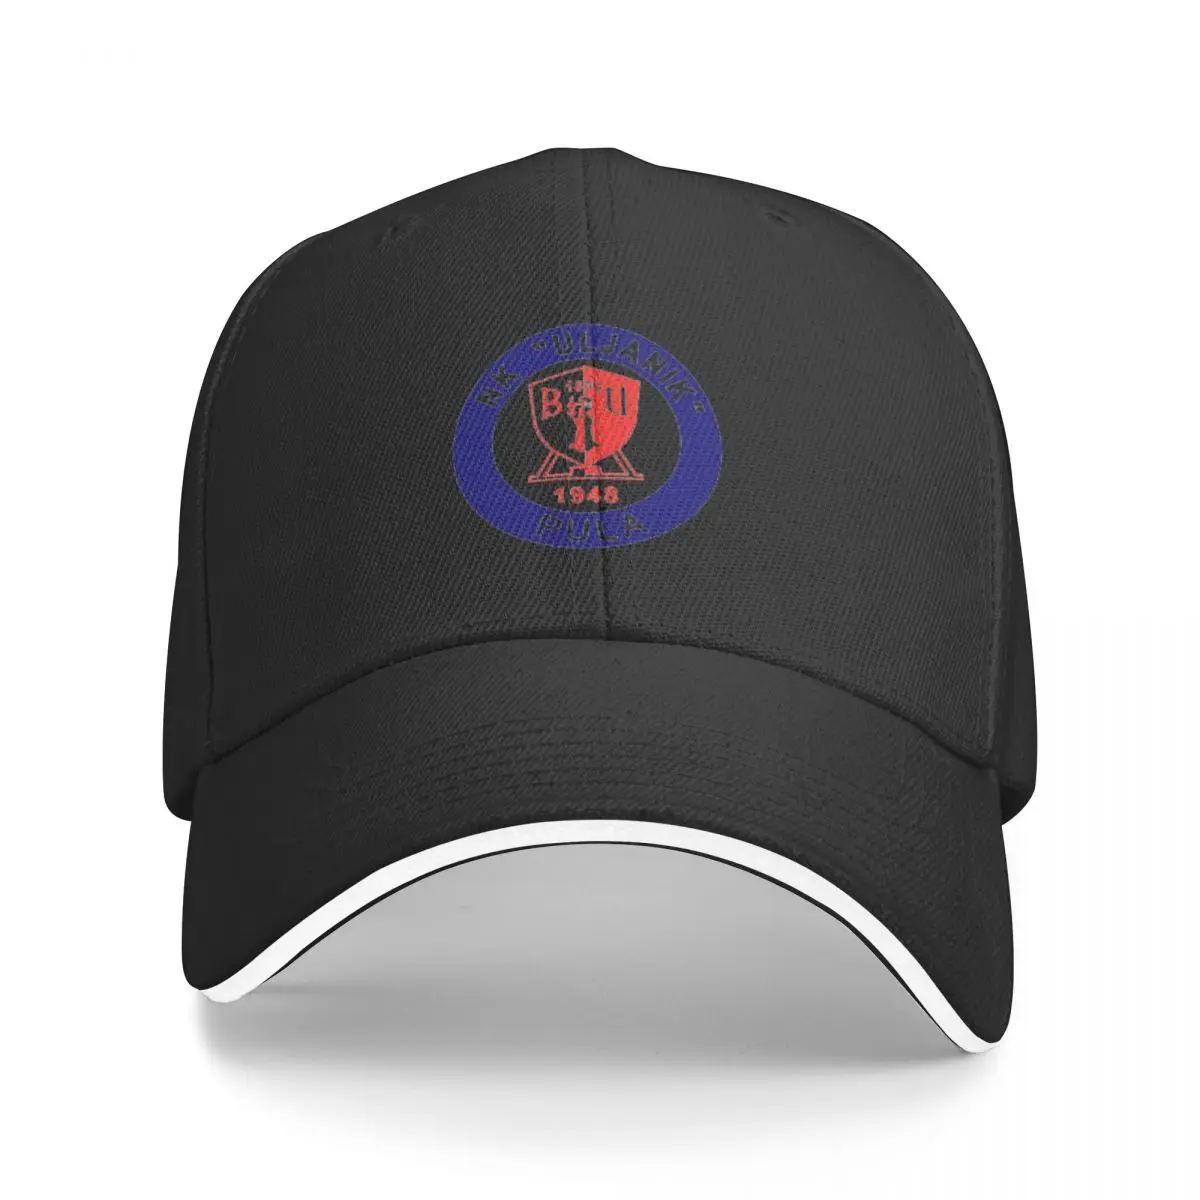 

NK ULJANIK PULA-Football club Baseball Cap Snapback Cap Golf Hat Man New In Hat Female Men's